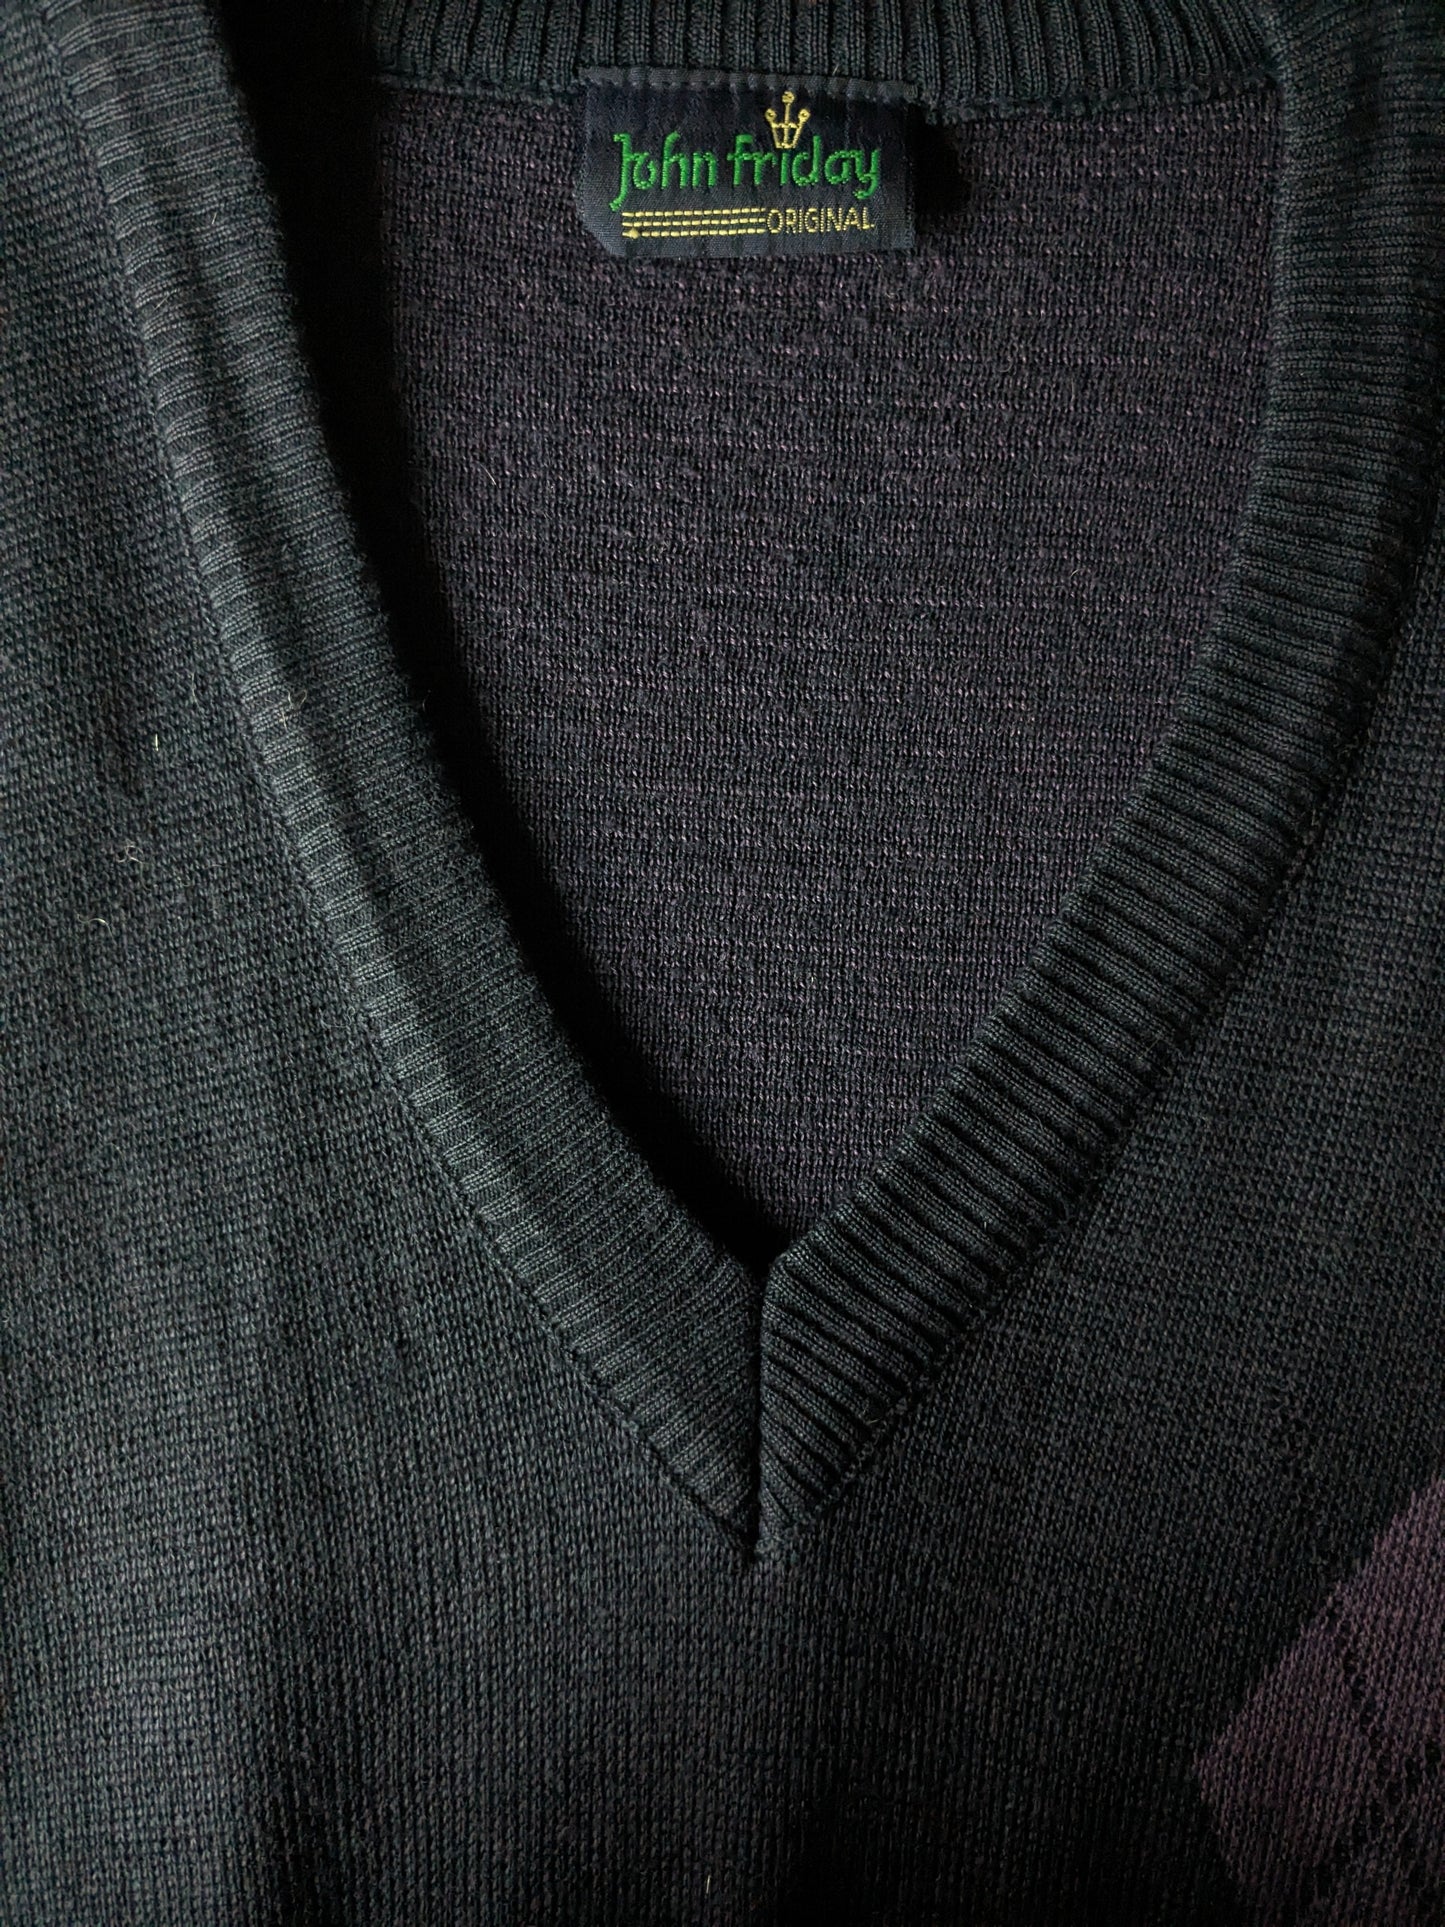 Vintage John Friday Spencer. Dark purple colored. Size S. 50% wool.